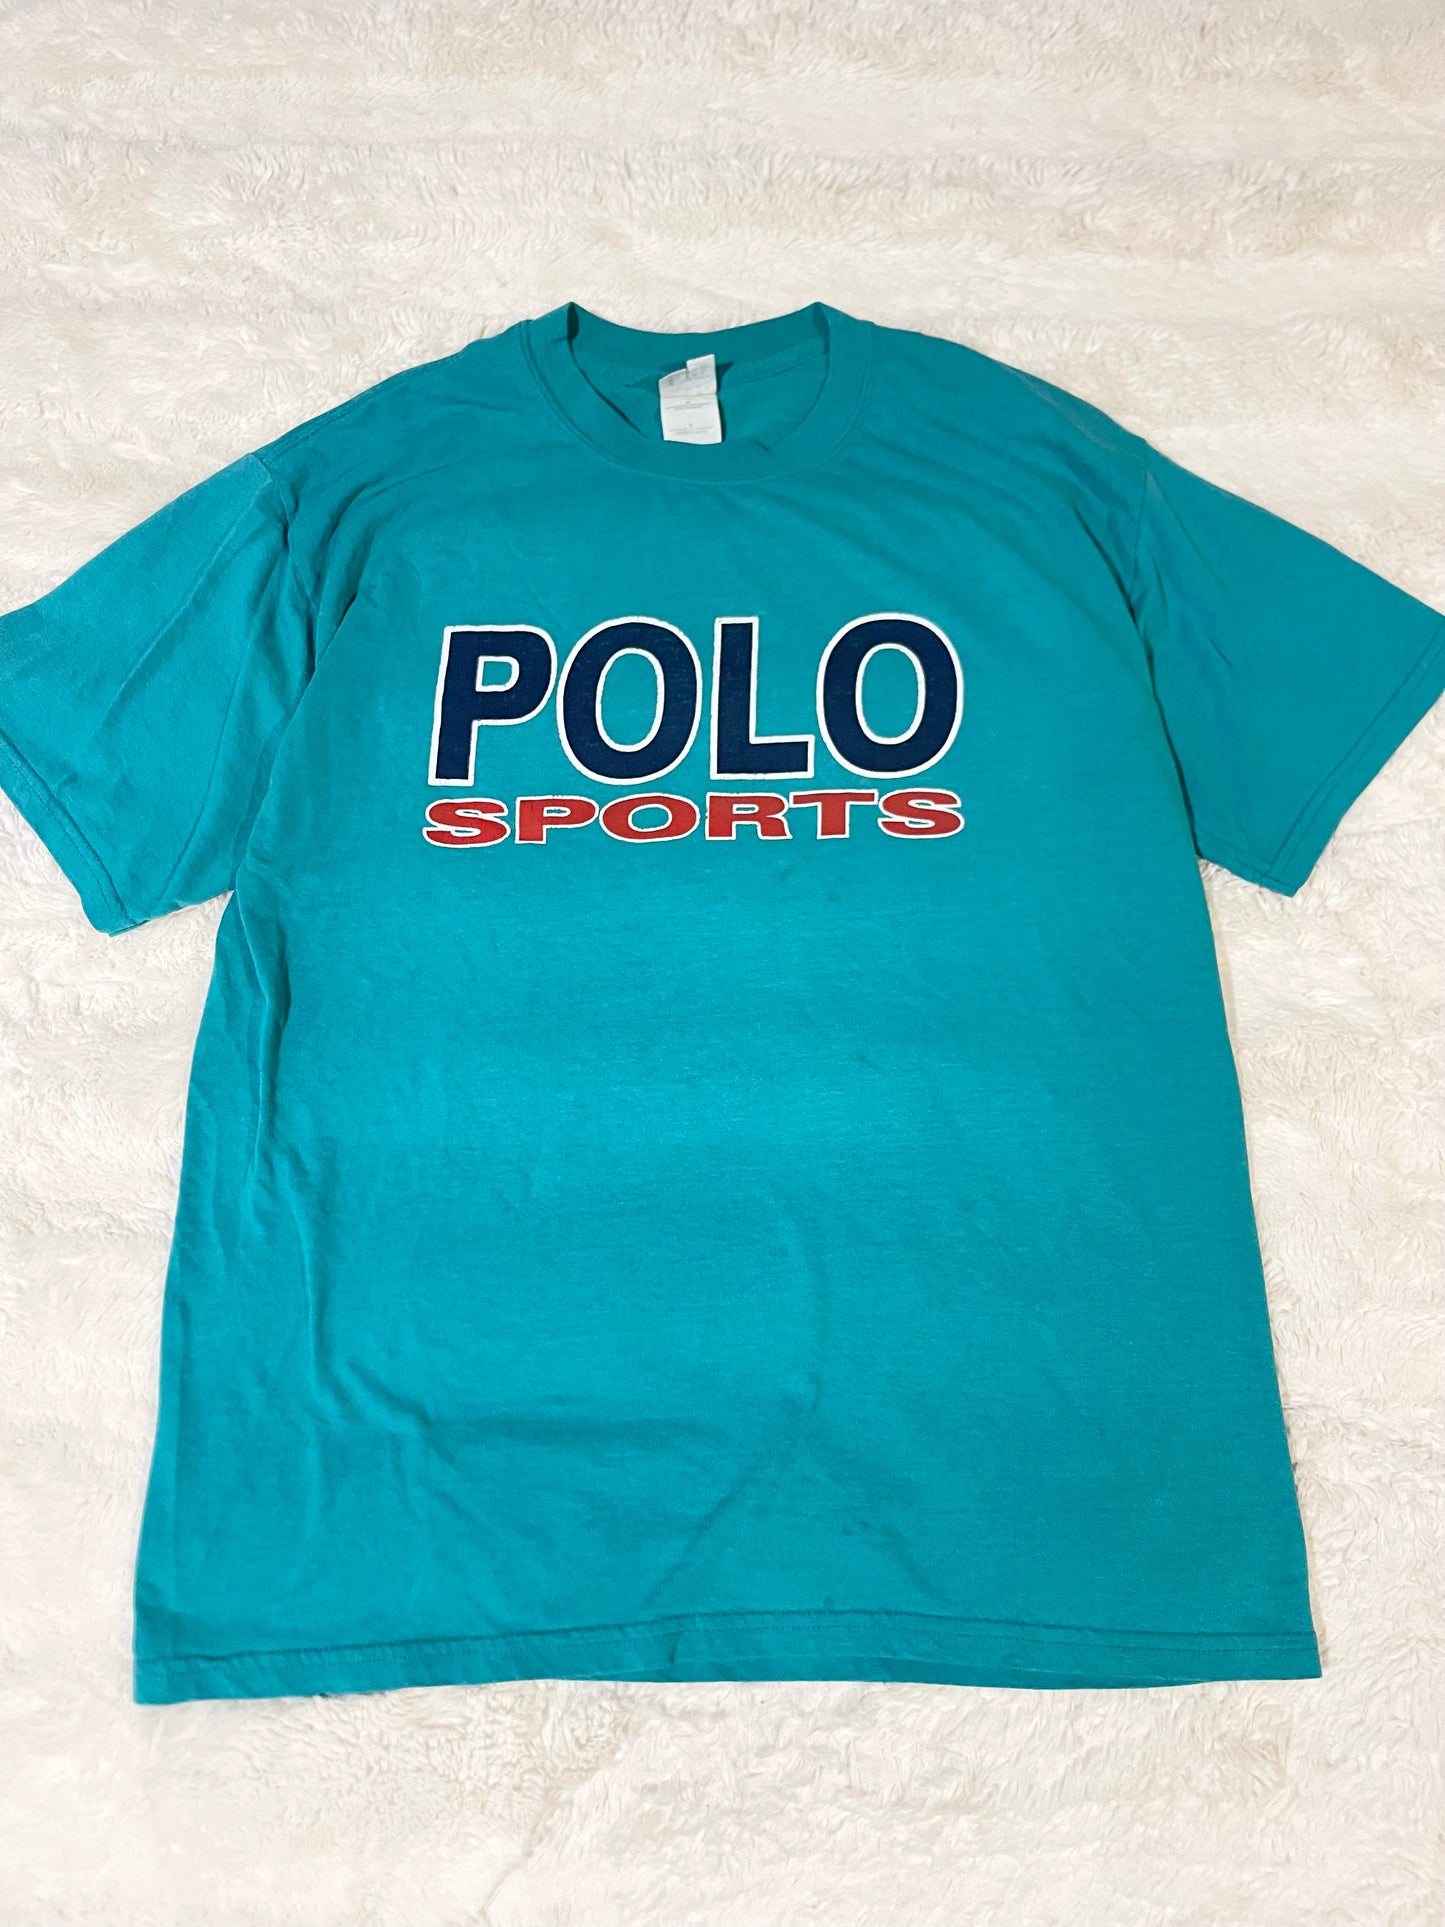 90s Polo Sports Tee (XL)